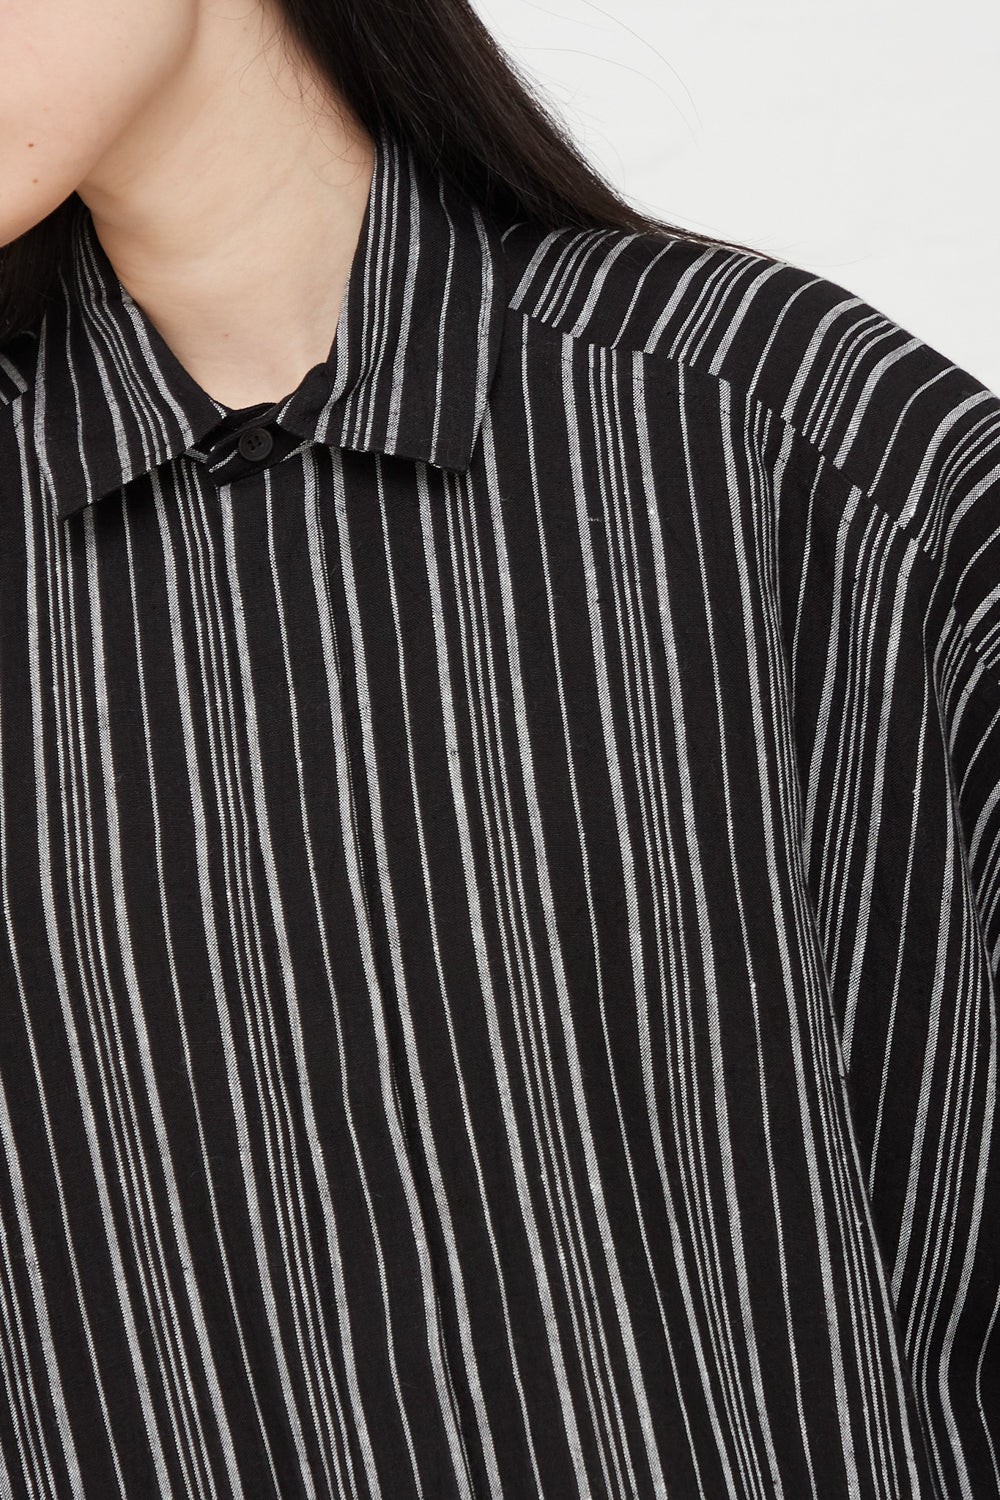 Jan-Jan Van Essche - Linen Batist Shirt in Contrast Stripe stripe detail